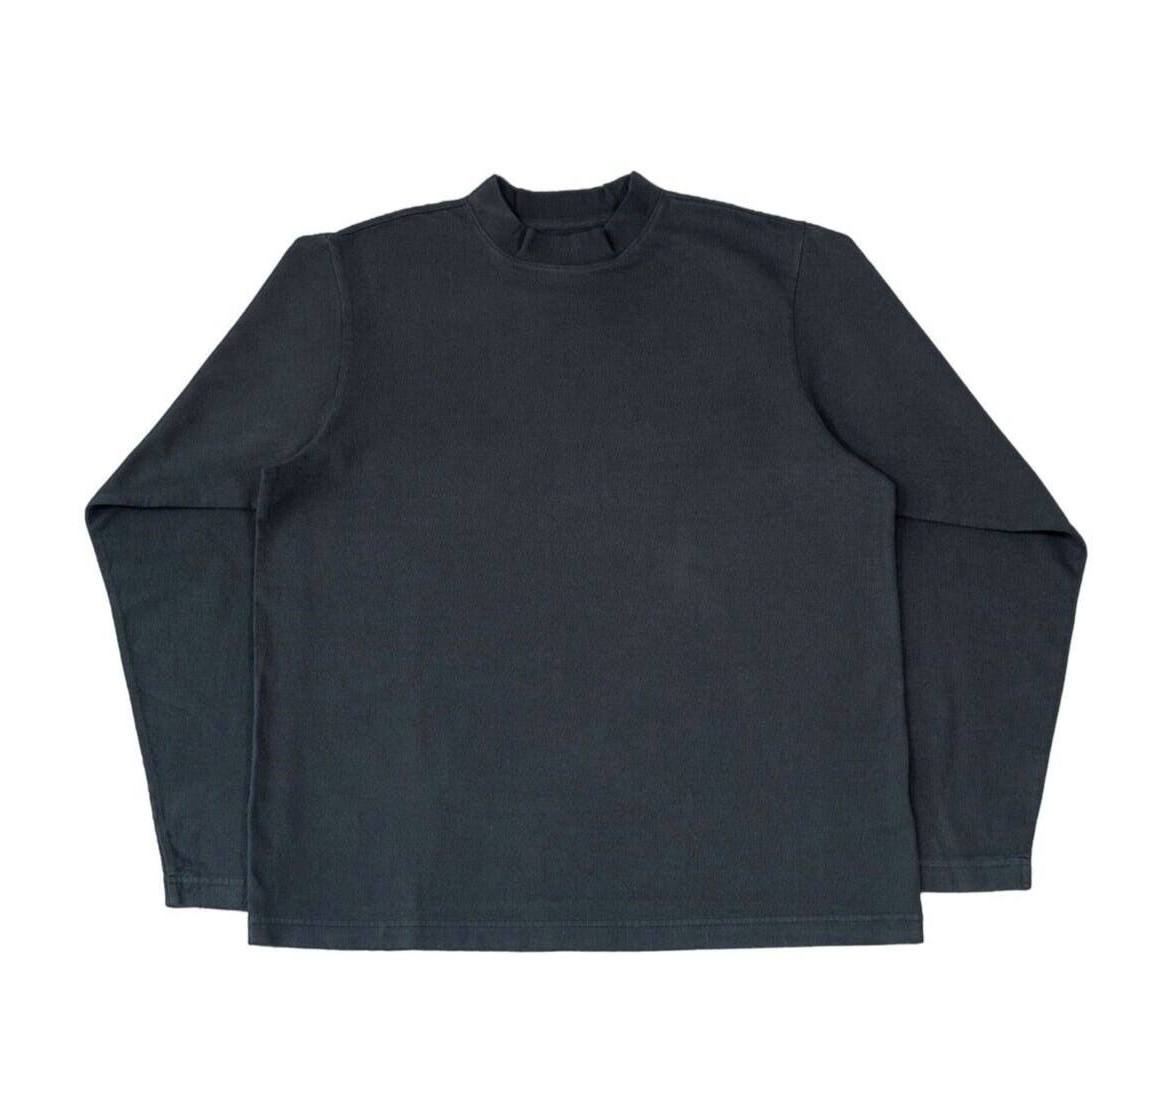 Yeezy Gap Longsleeve T-Shirt Black